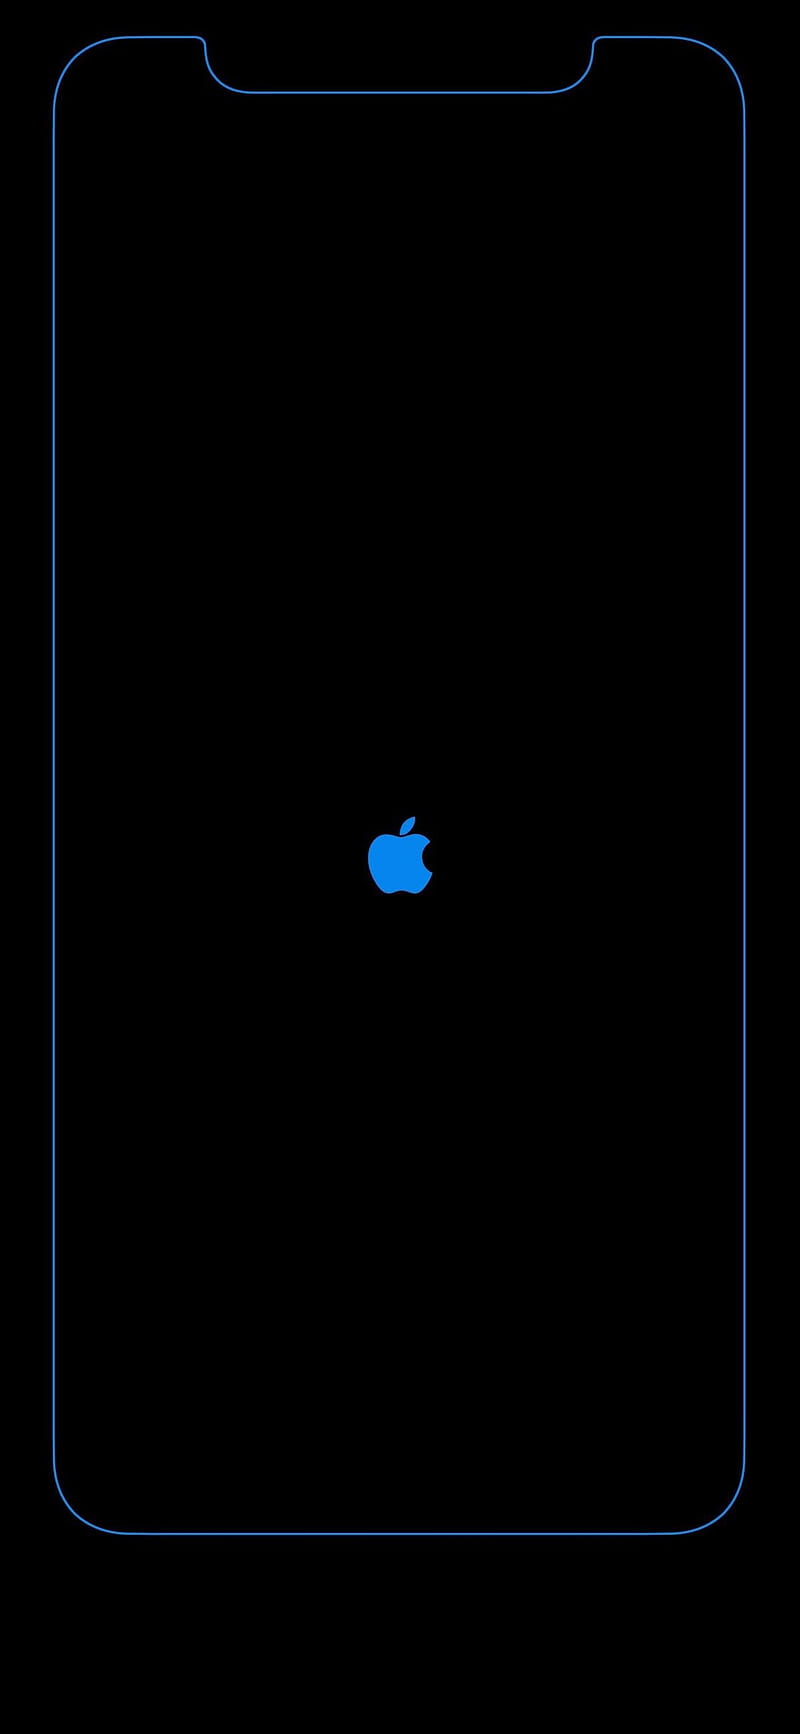 iPhone: Winter 2022 — Basic Apple Guy